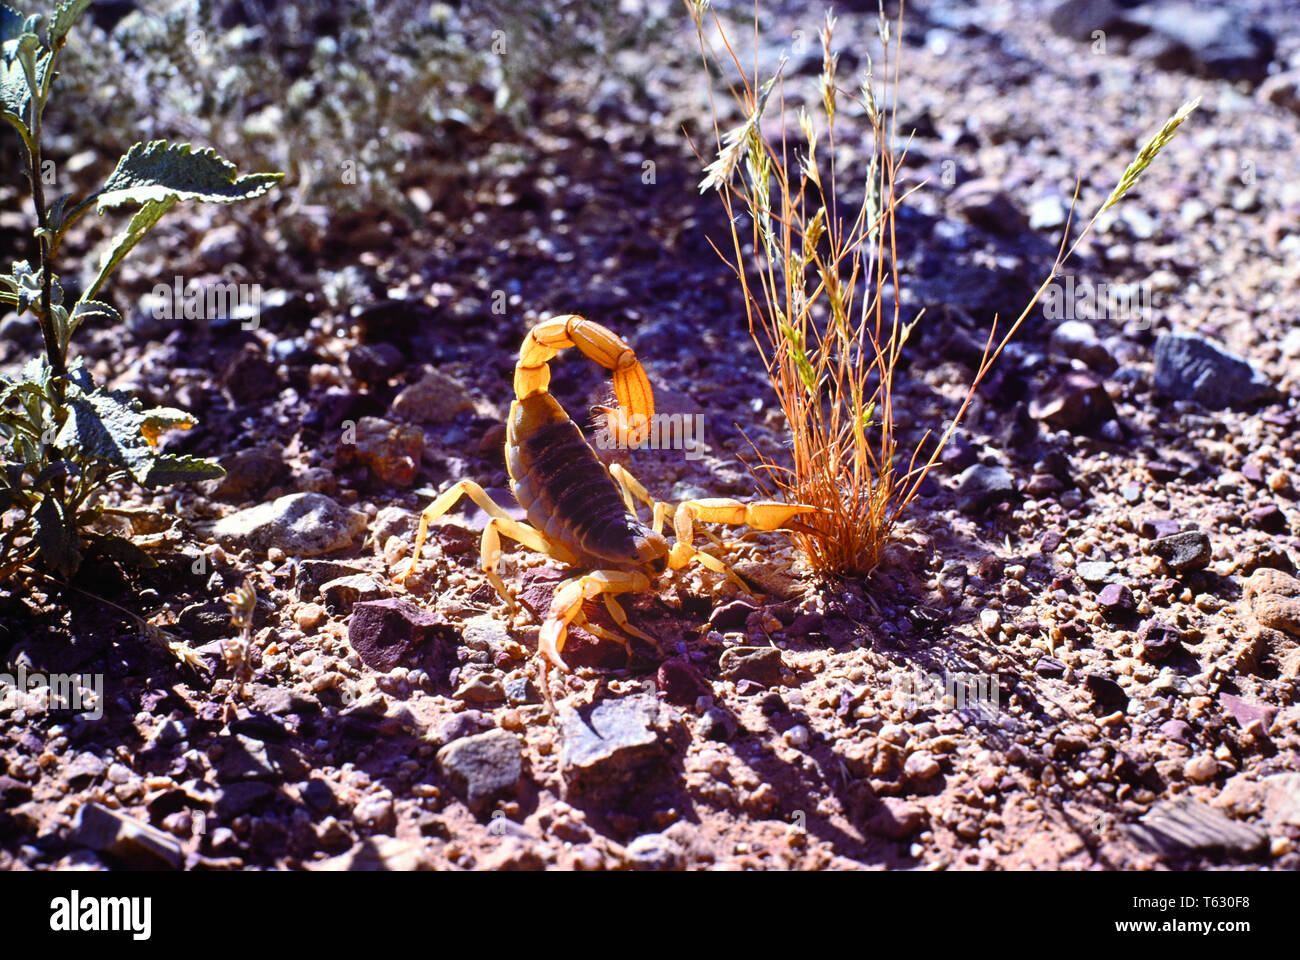 scorpion arizona Stock Photo